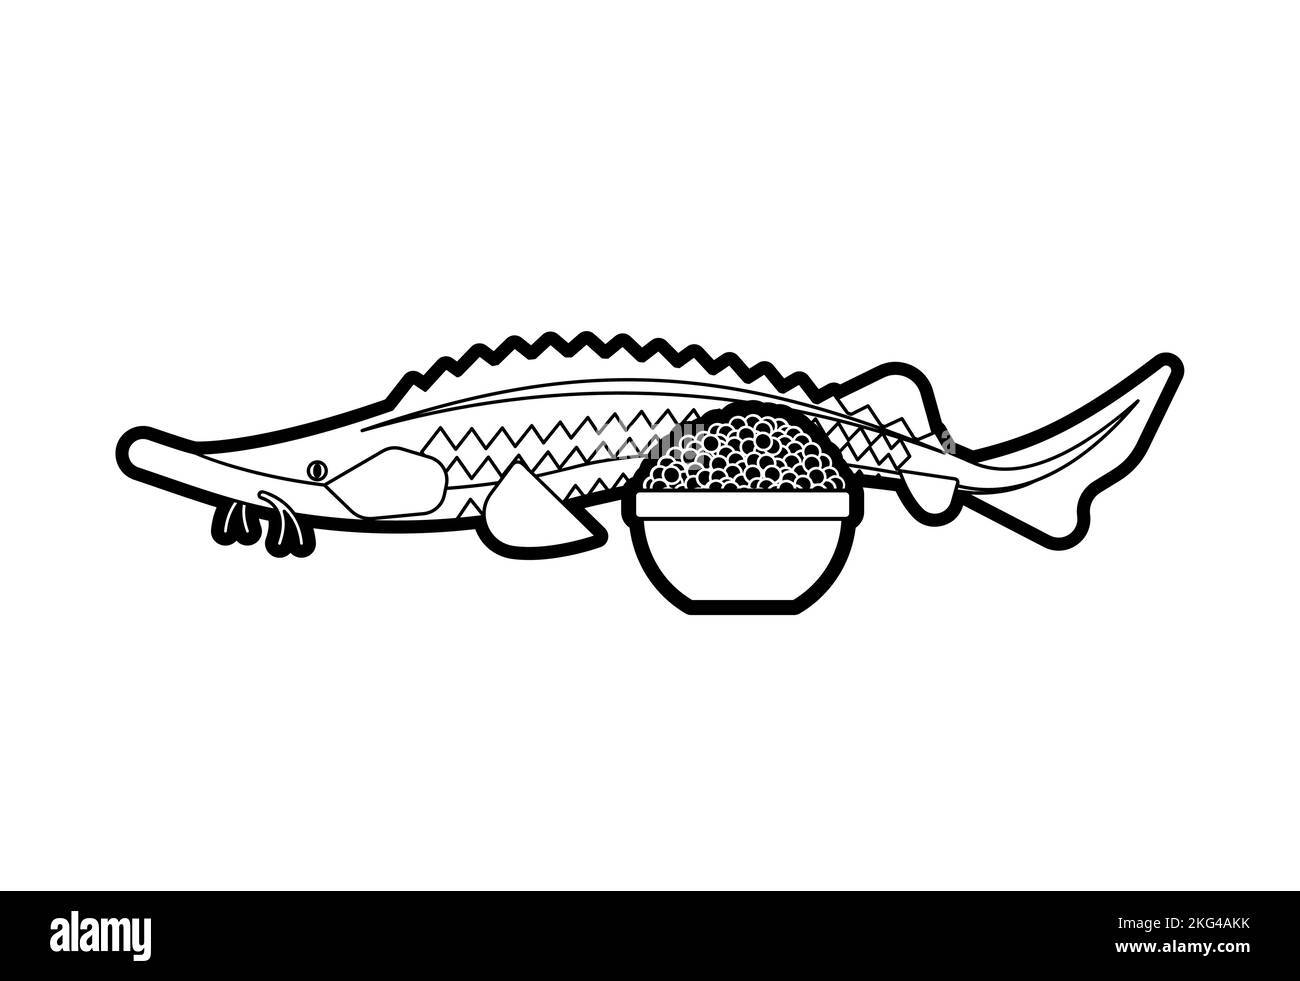 Sturgeon and black caviar isolated. Fish delicacy. Stock Vector